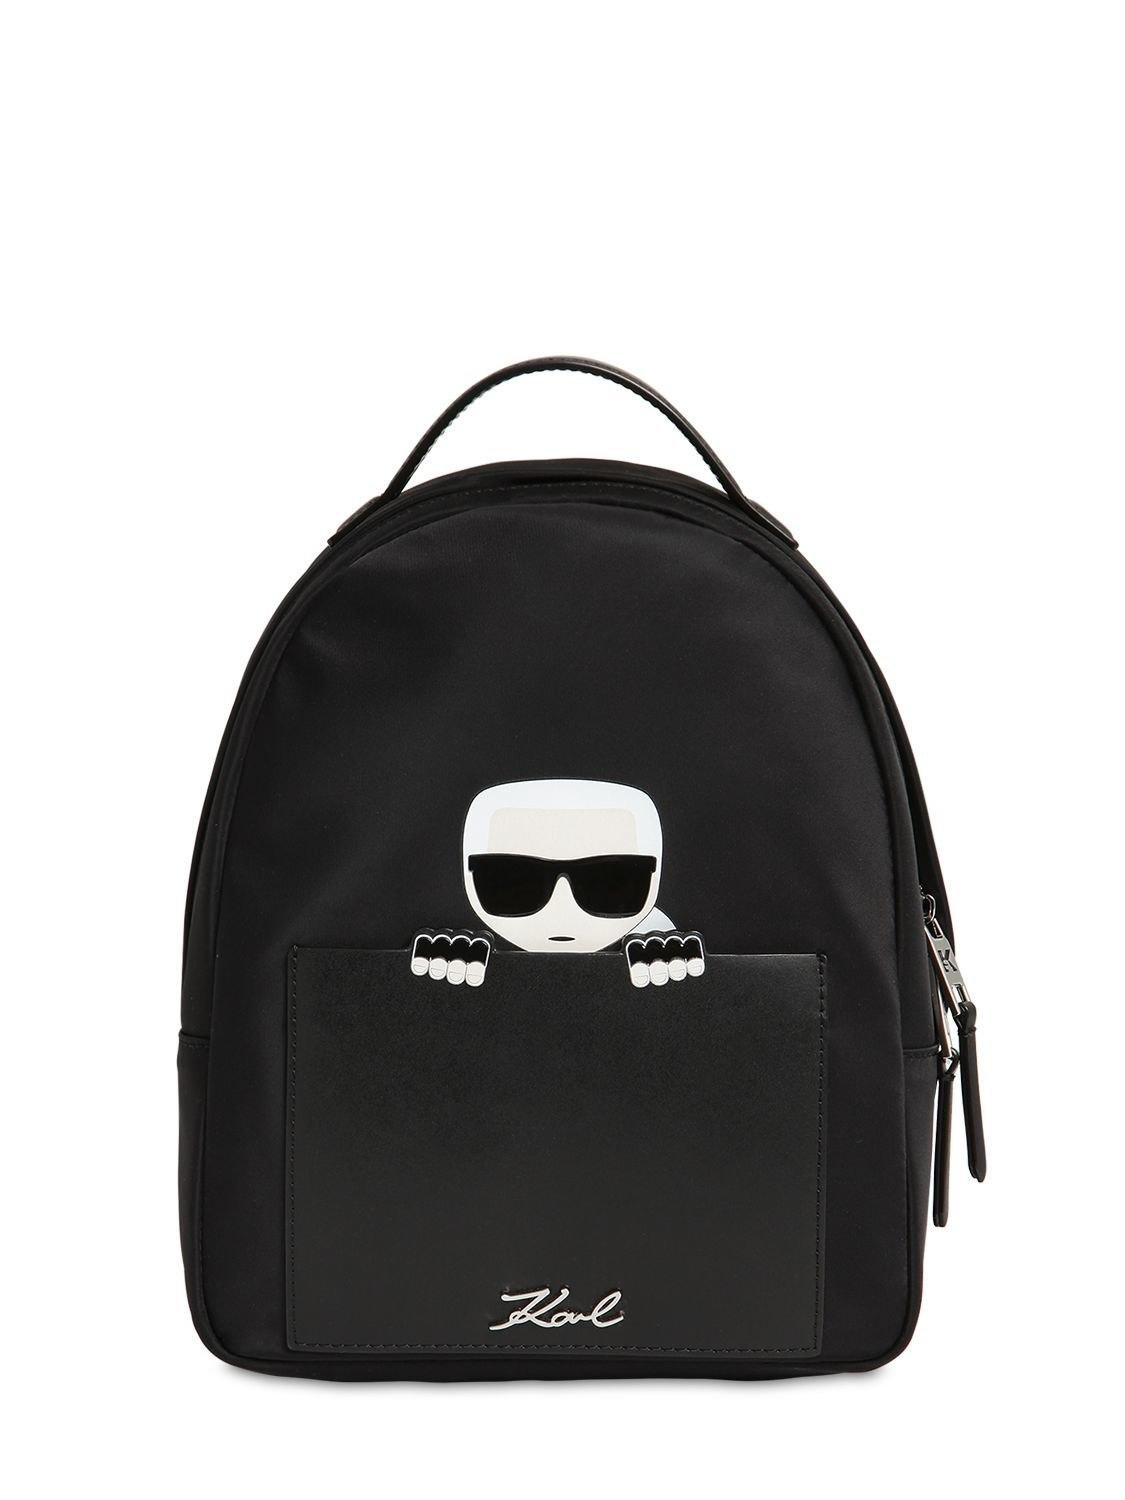 Karl Lagerfeld Small Karl Ikonik Nylon Backpack in Black | Lyst Canada